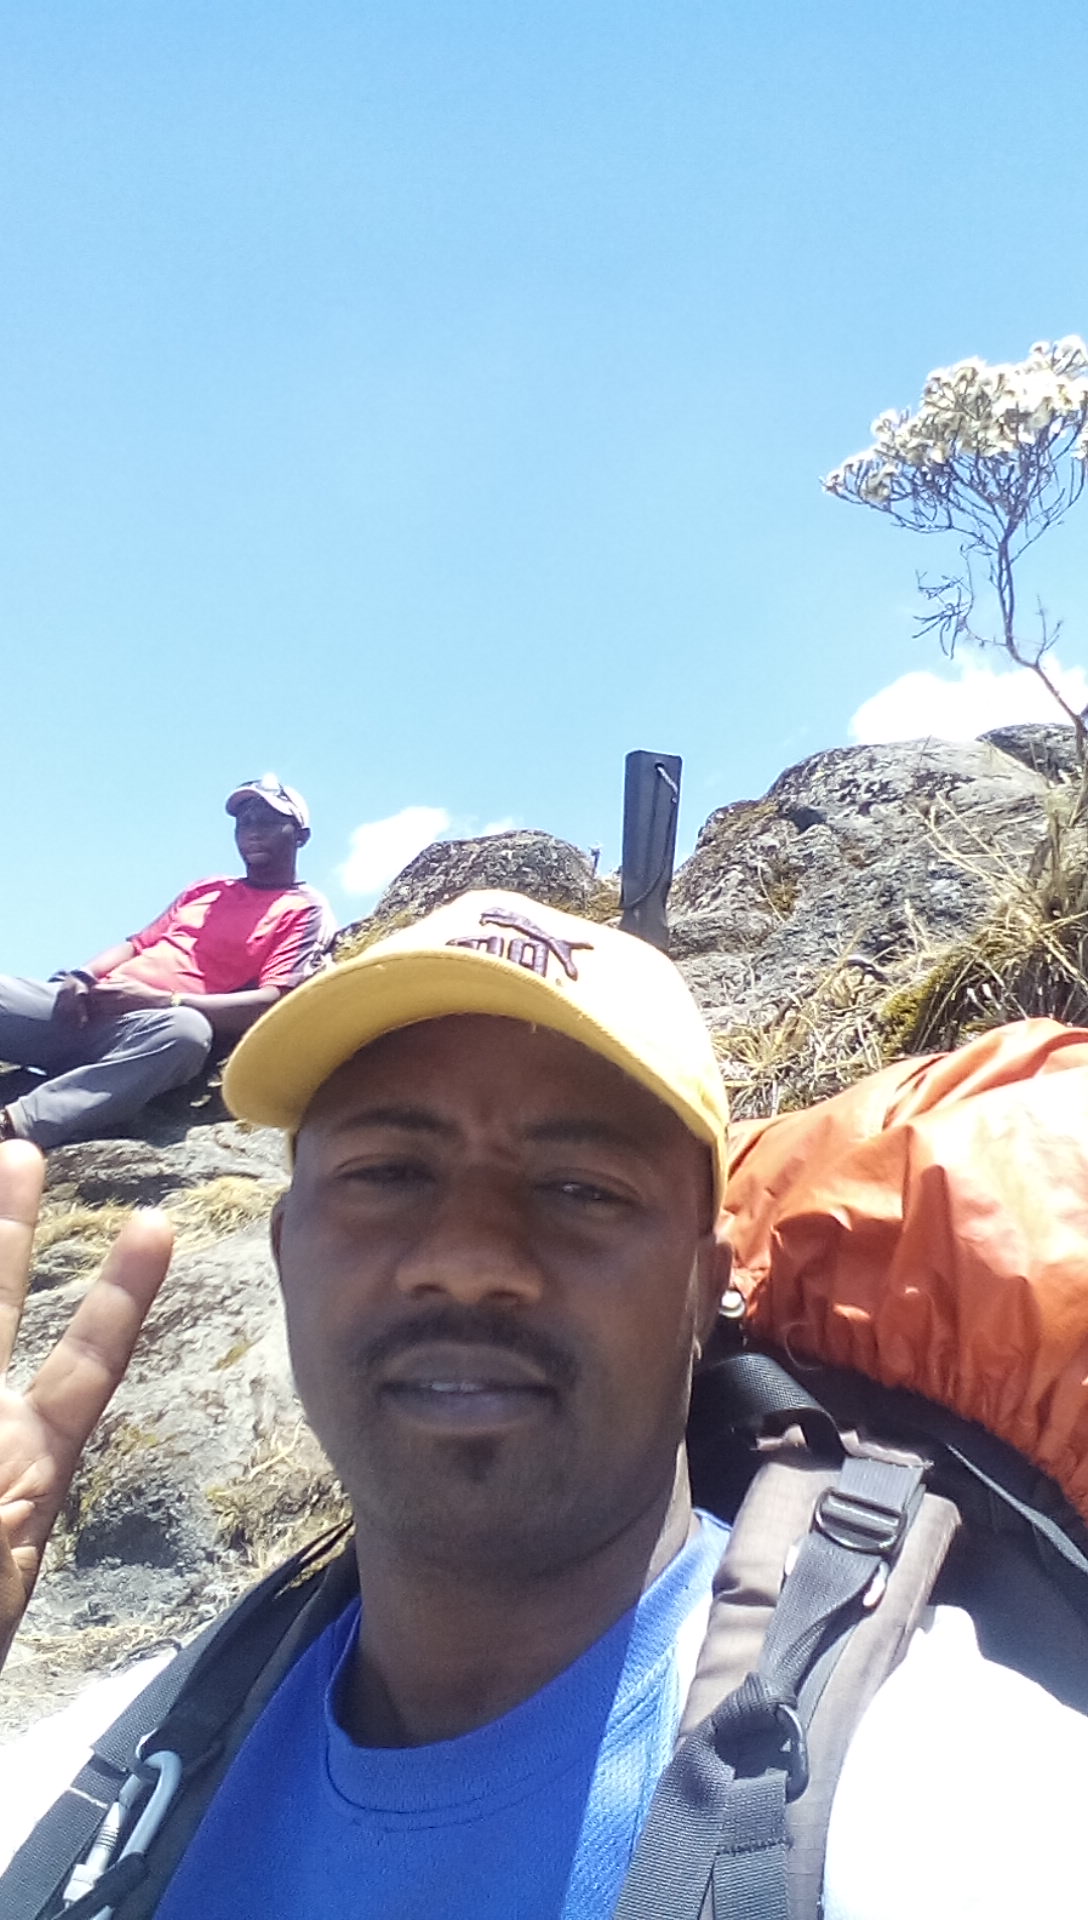 Lemosho route Climbing Kilimanjaro